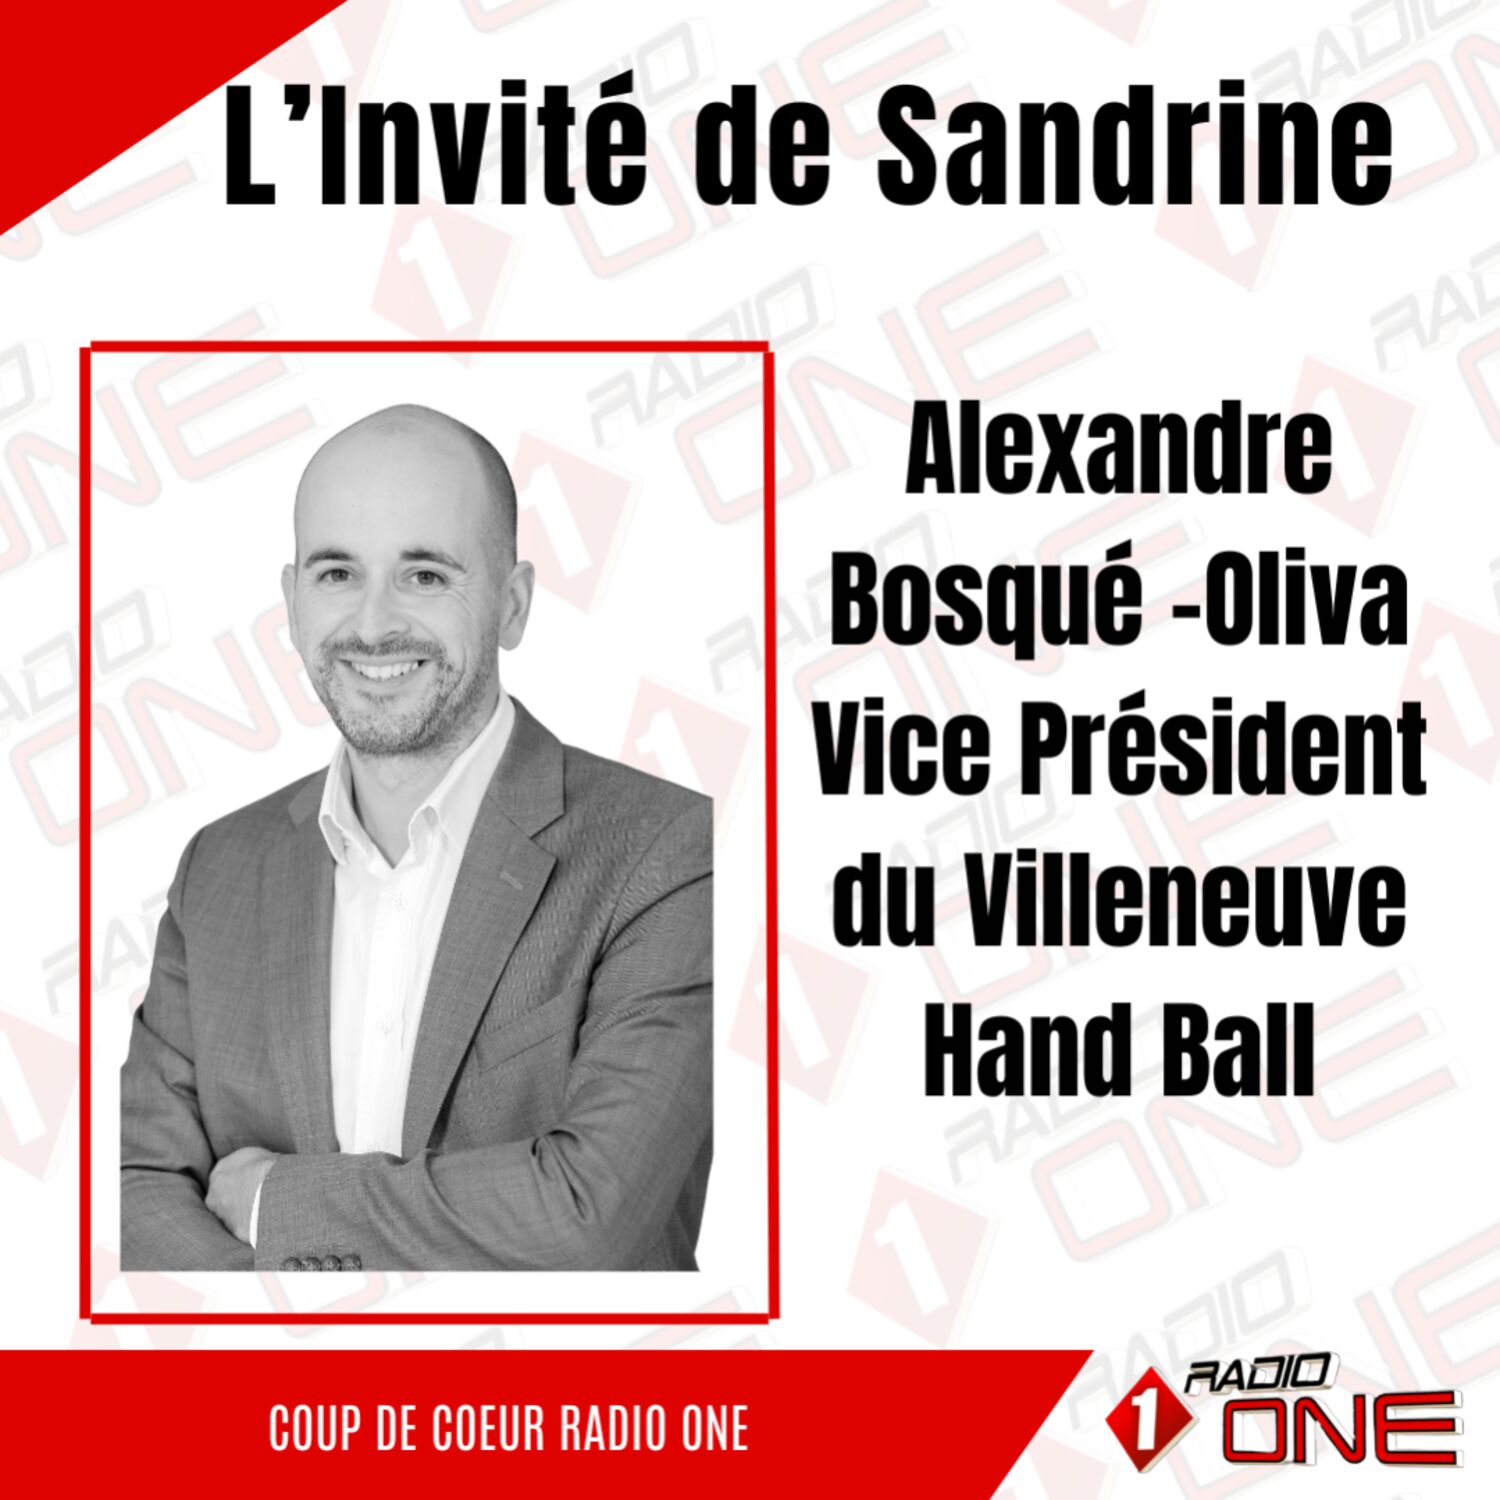 Alexandre Bosqué-Oliva, Vice Président du Villeneuve Hand Ball